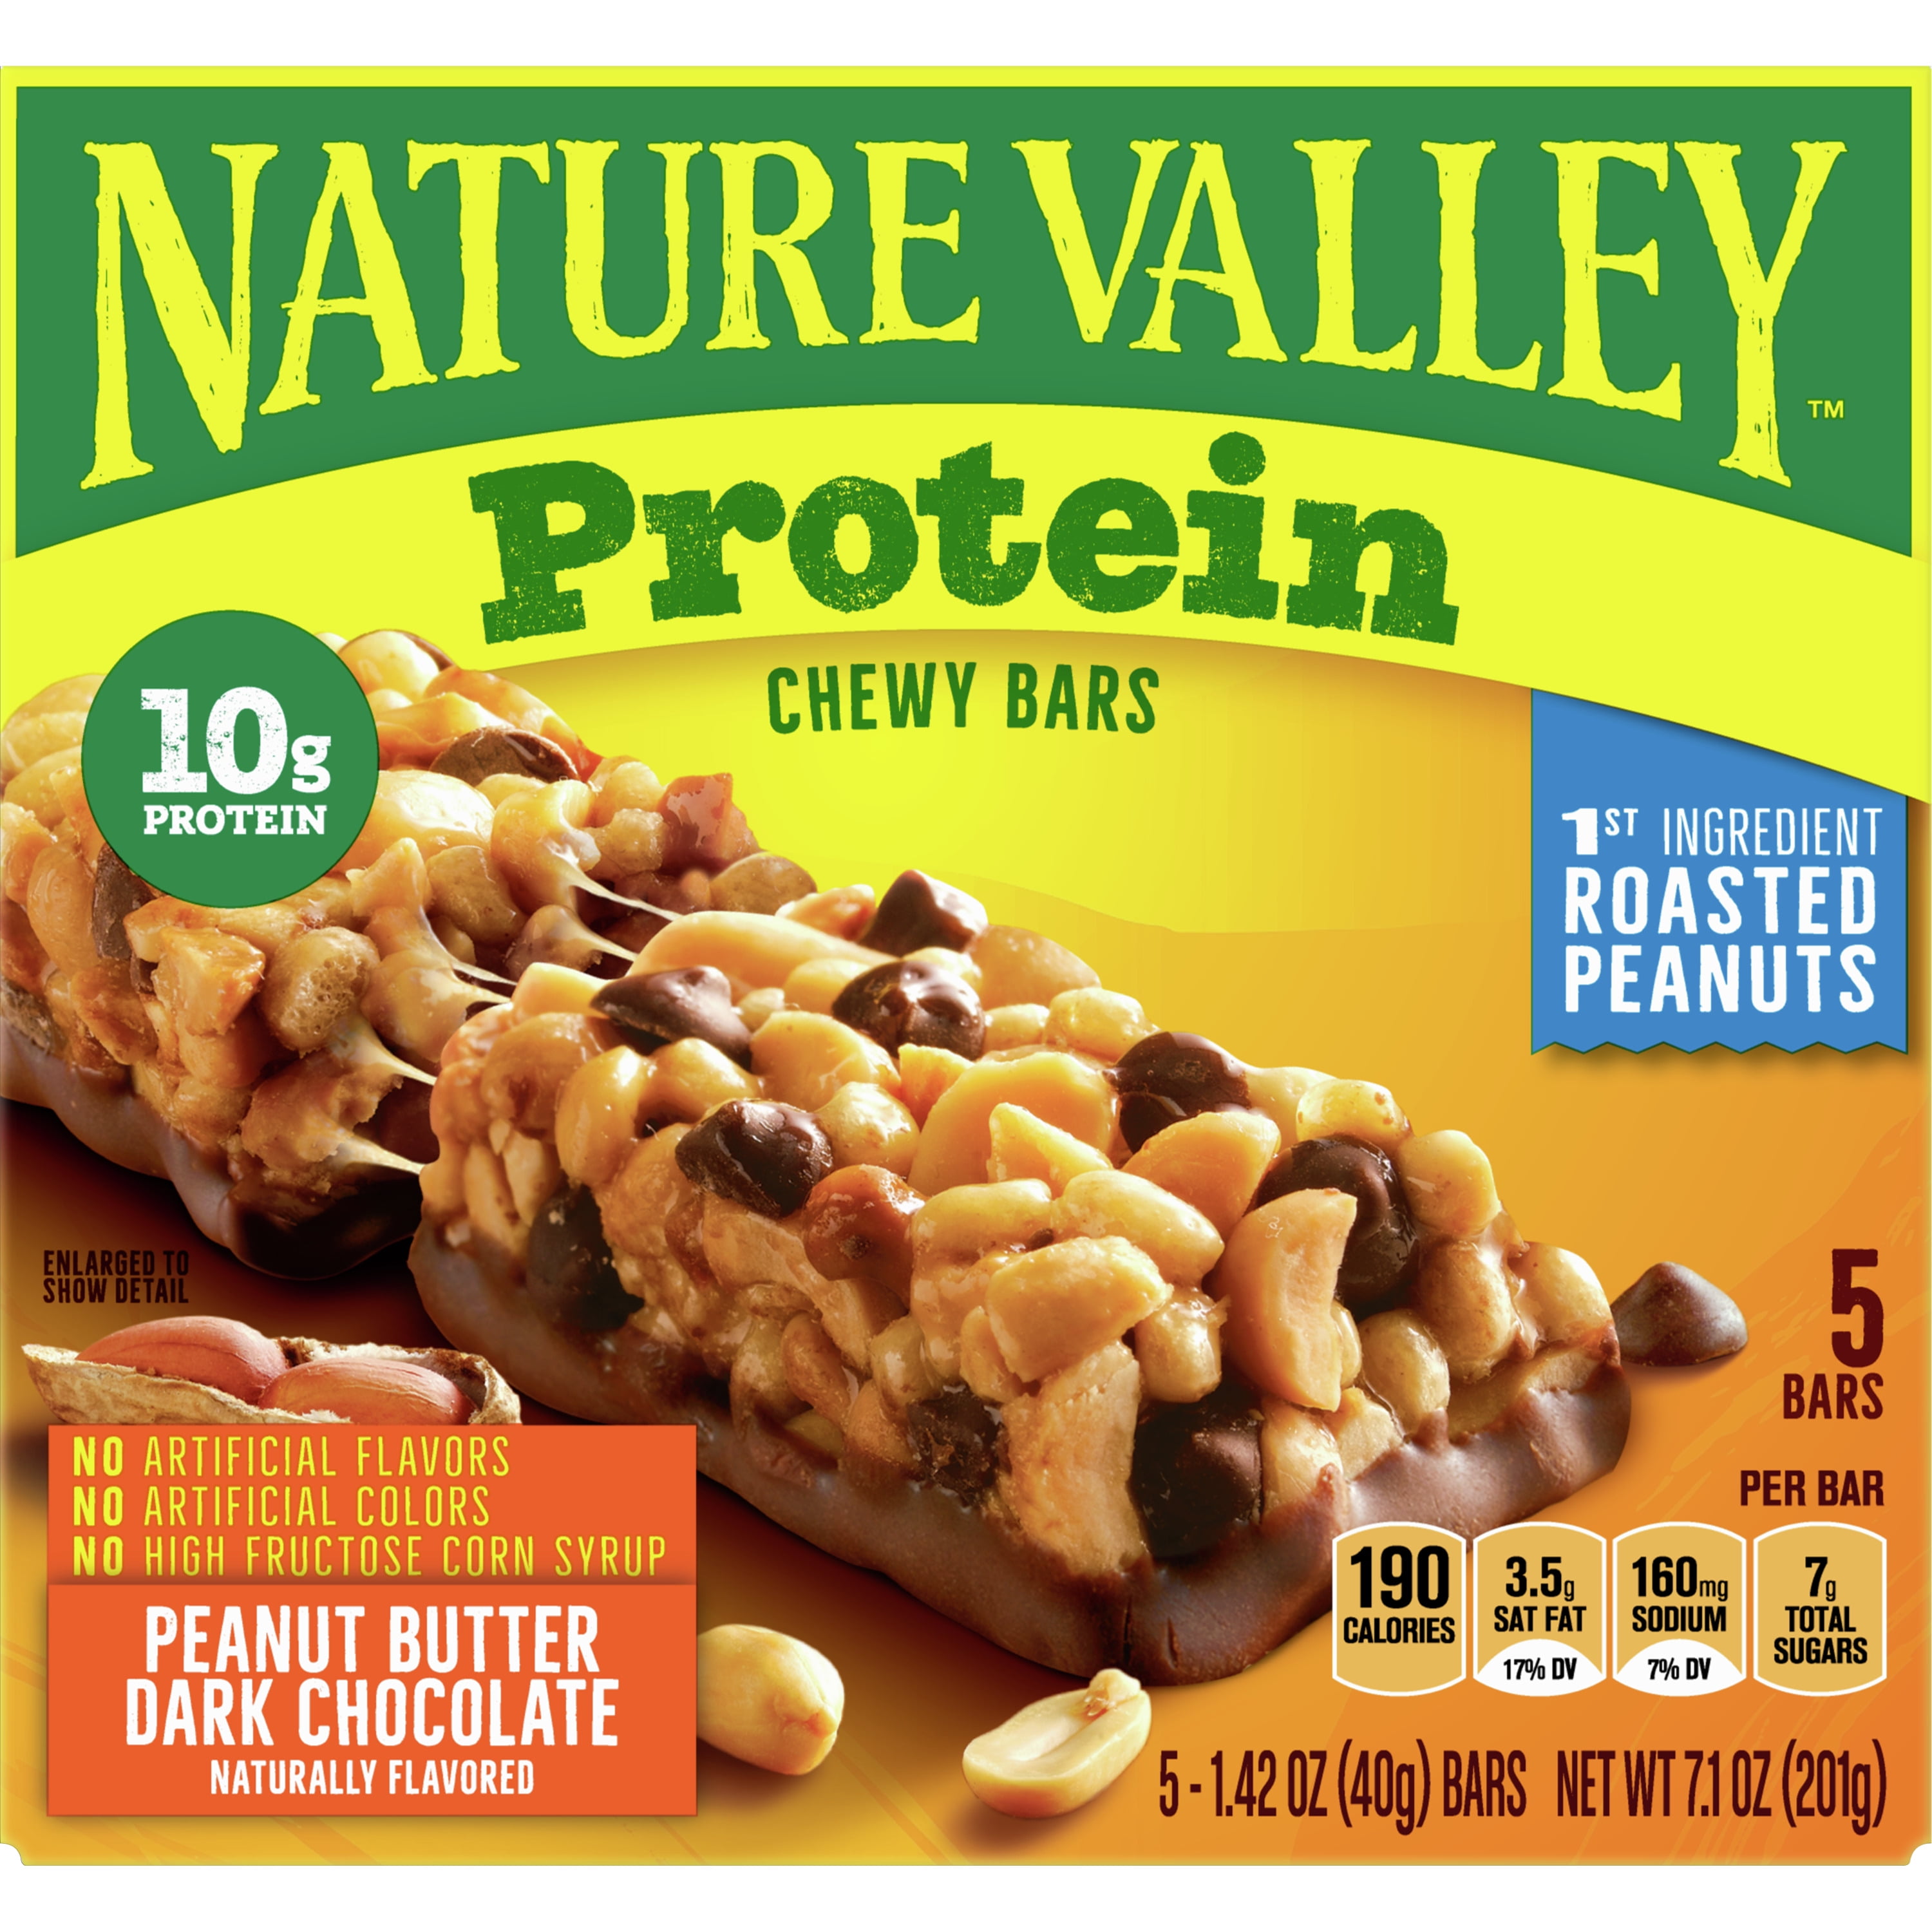 Nature Valley Protein Peanut, Almond & Dark Chocolate Chewy Bars